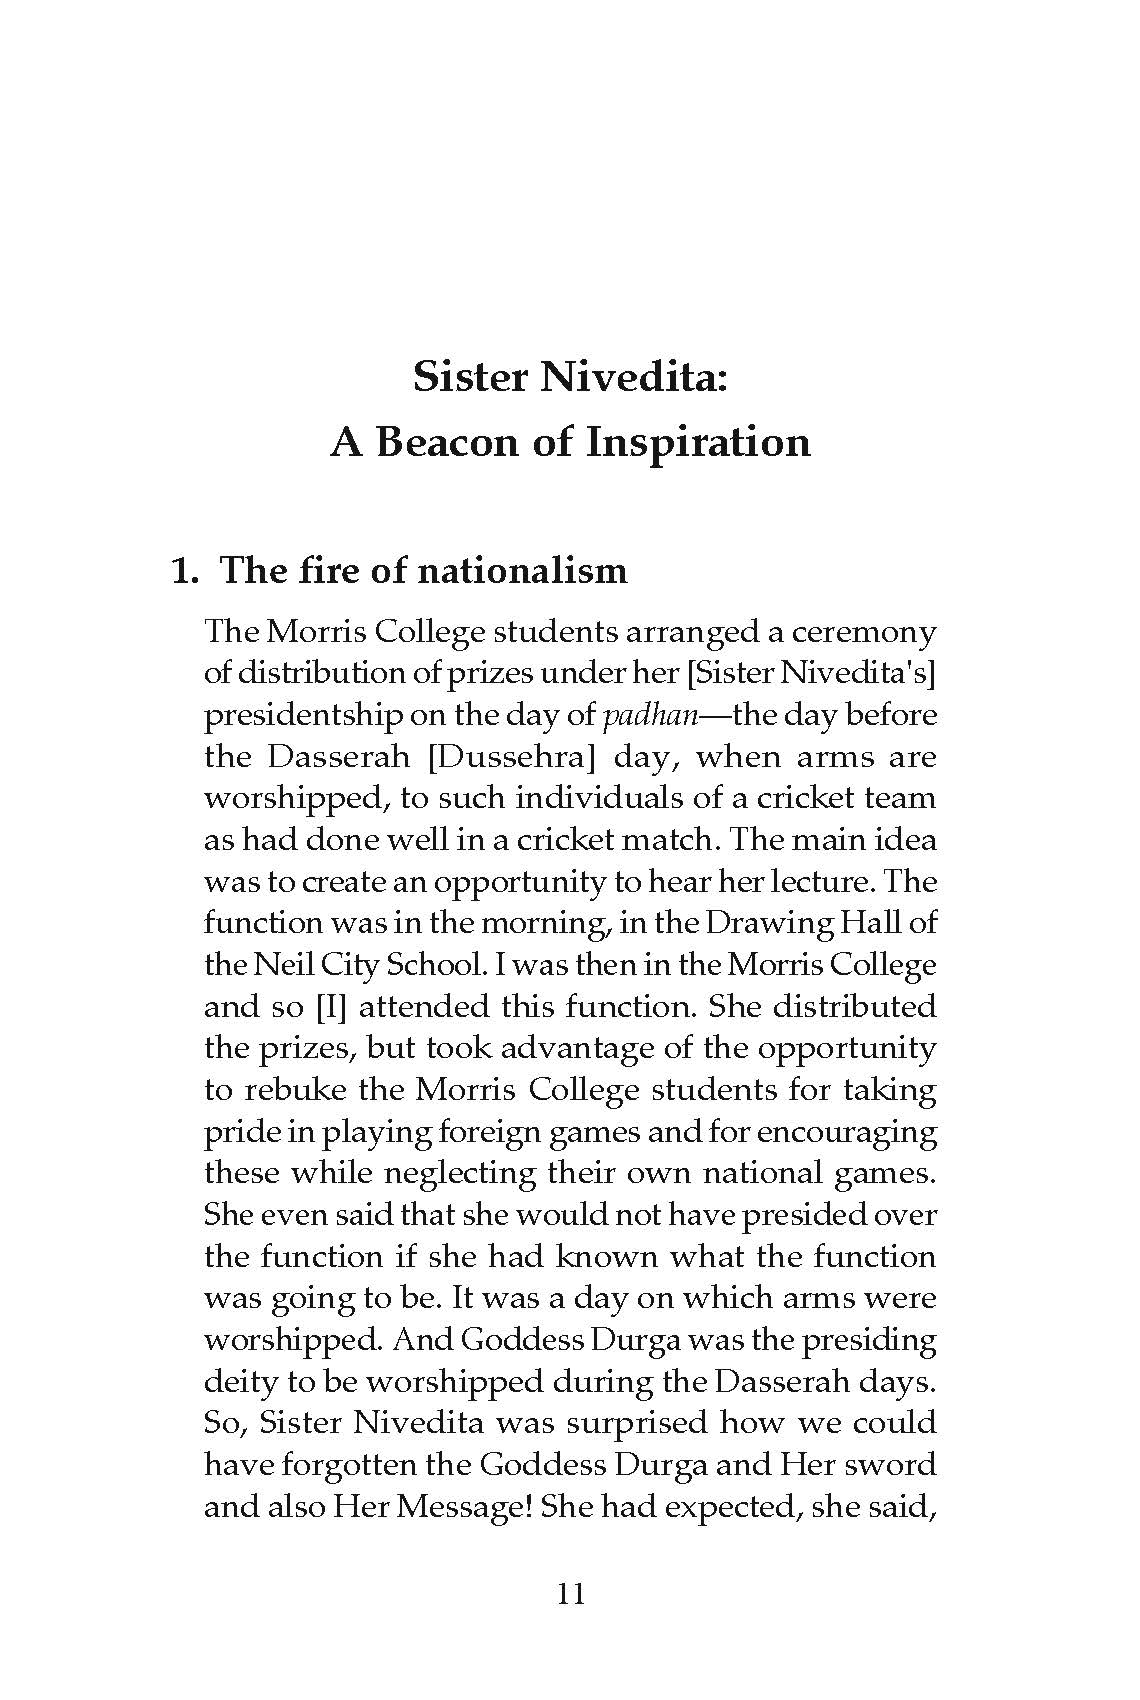 Sister Nivedita - A Beacon of Inspiration